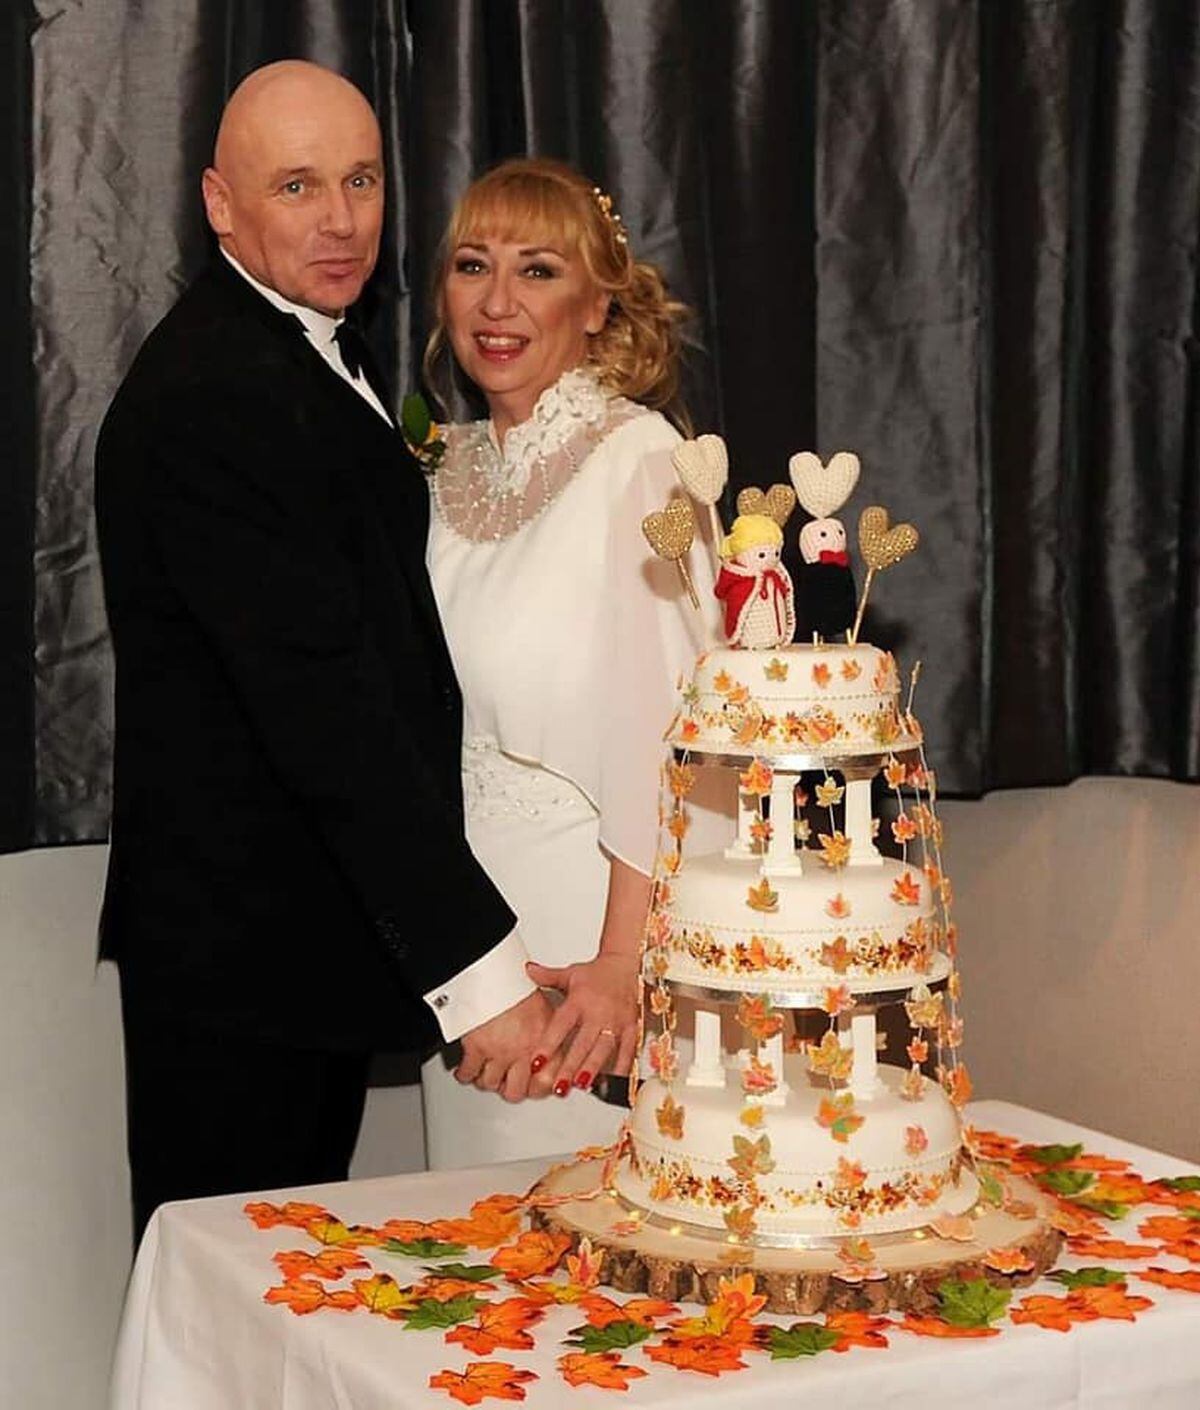 The happy couple with their wedding cake. Photo: Amanda Reynolds 